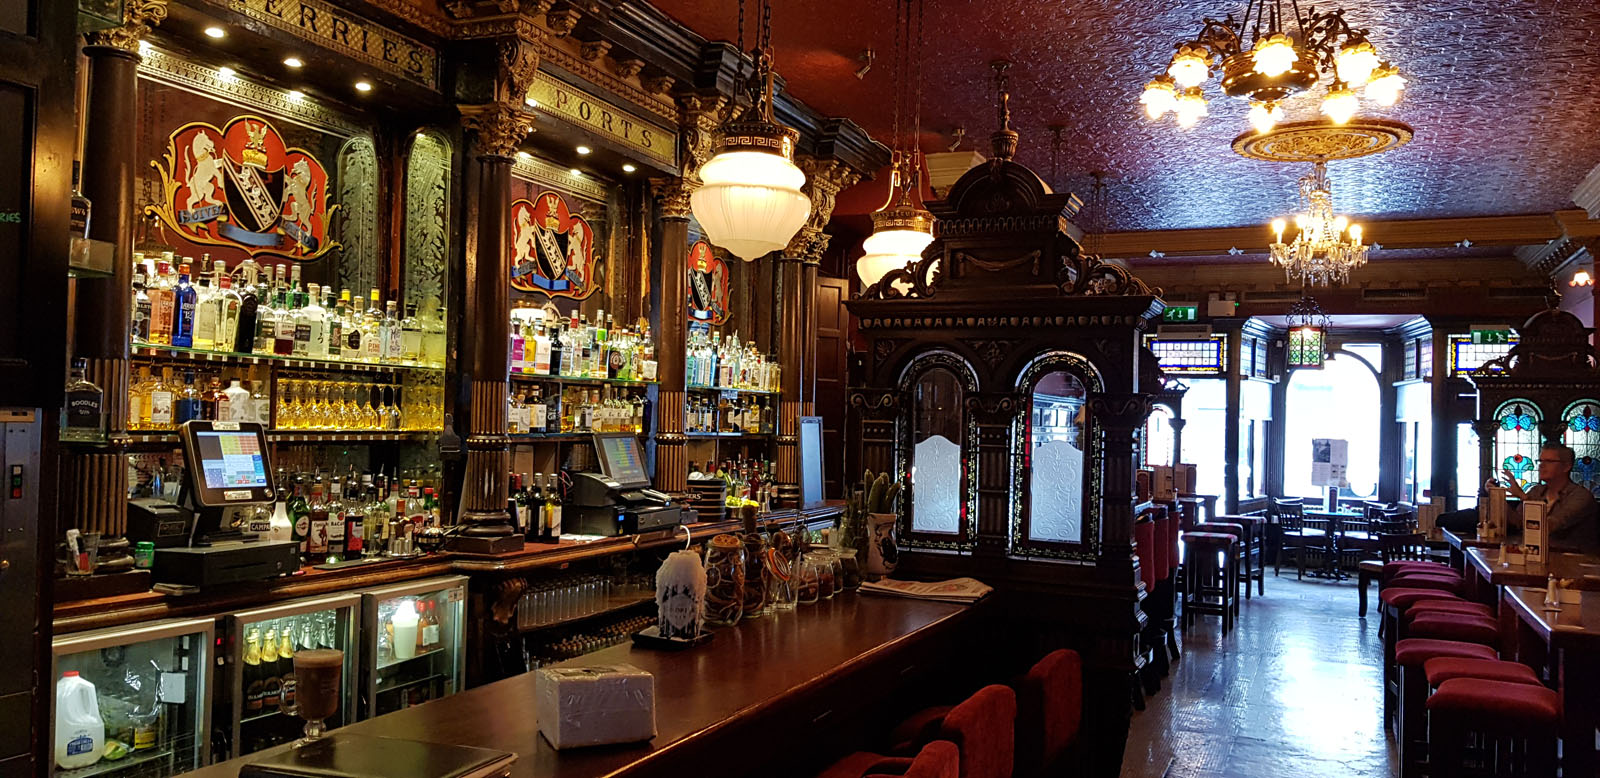 Most beautiful wooden bar in Dublin?